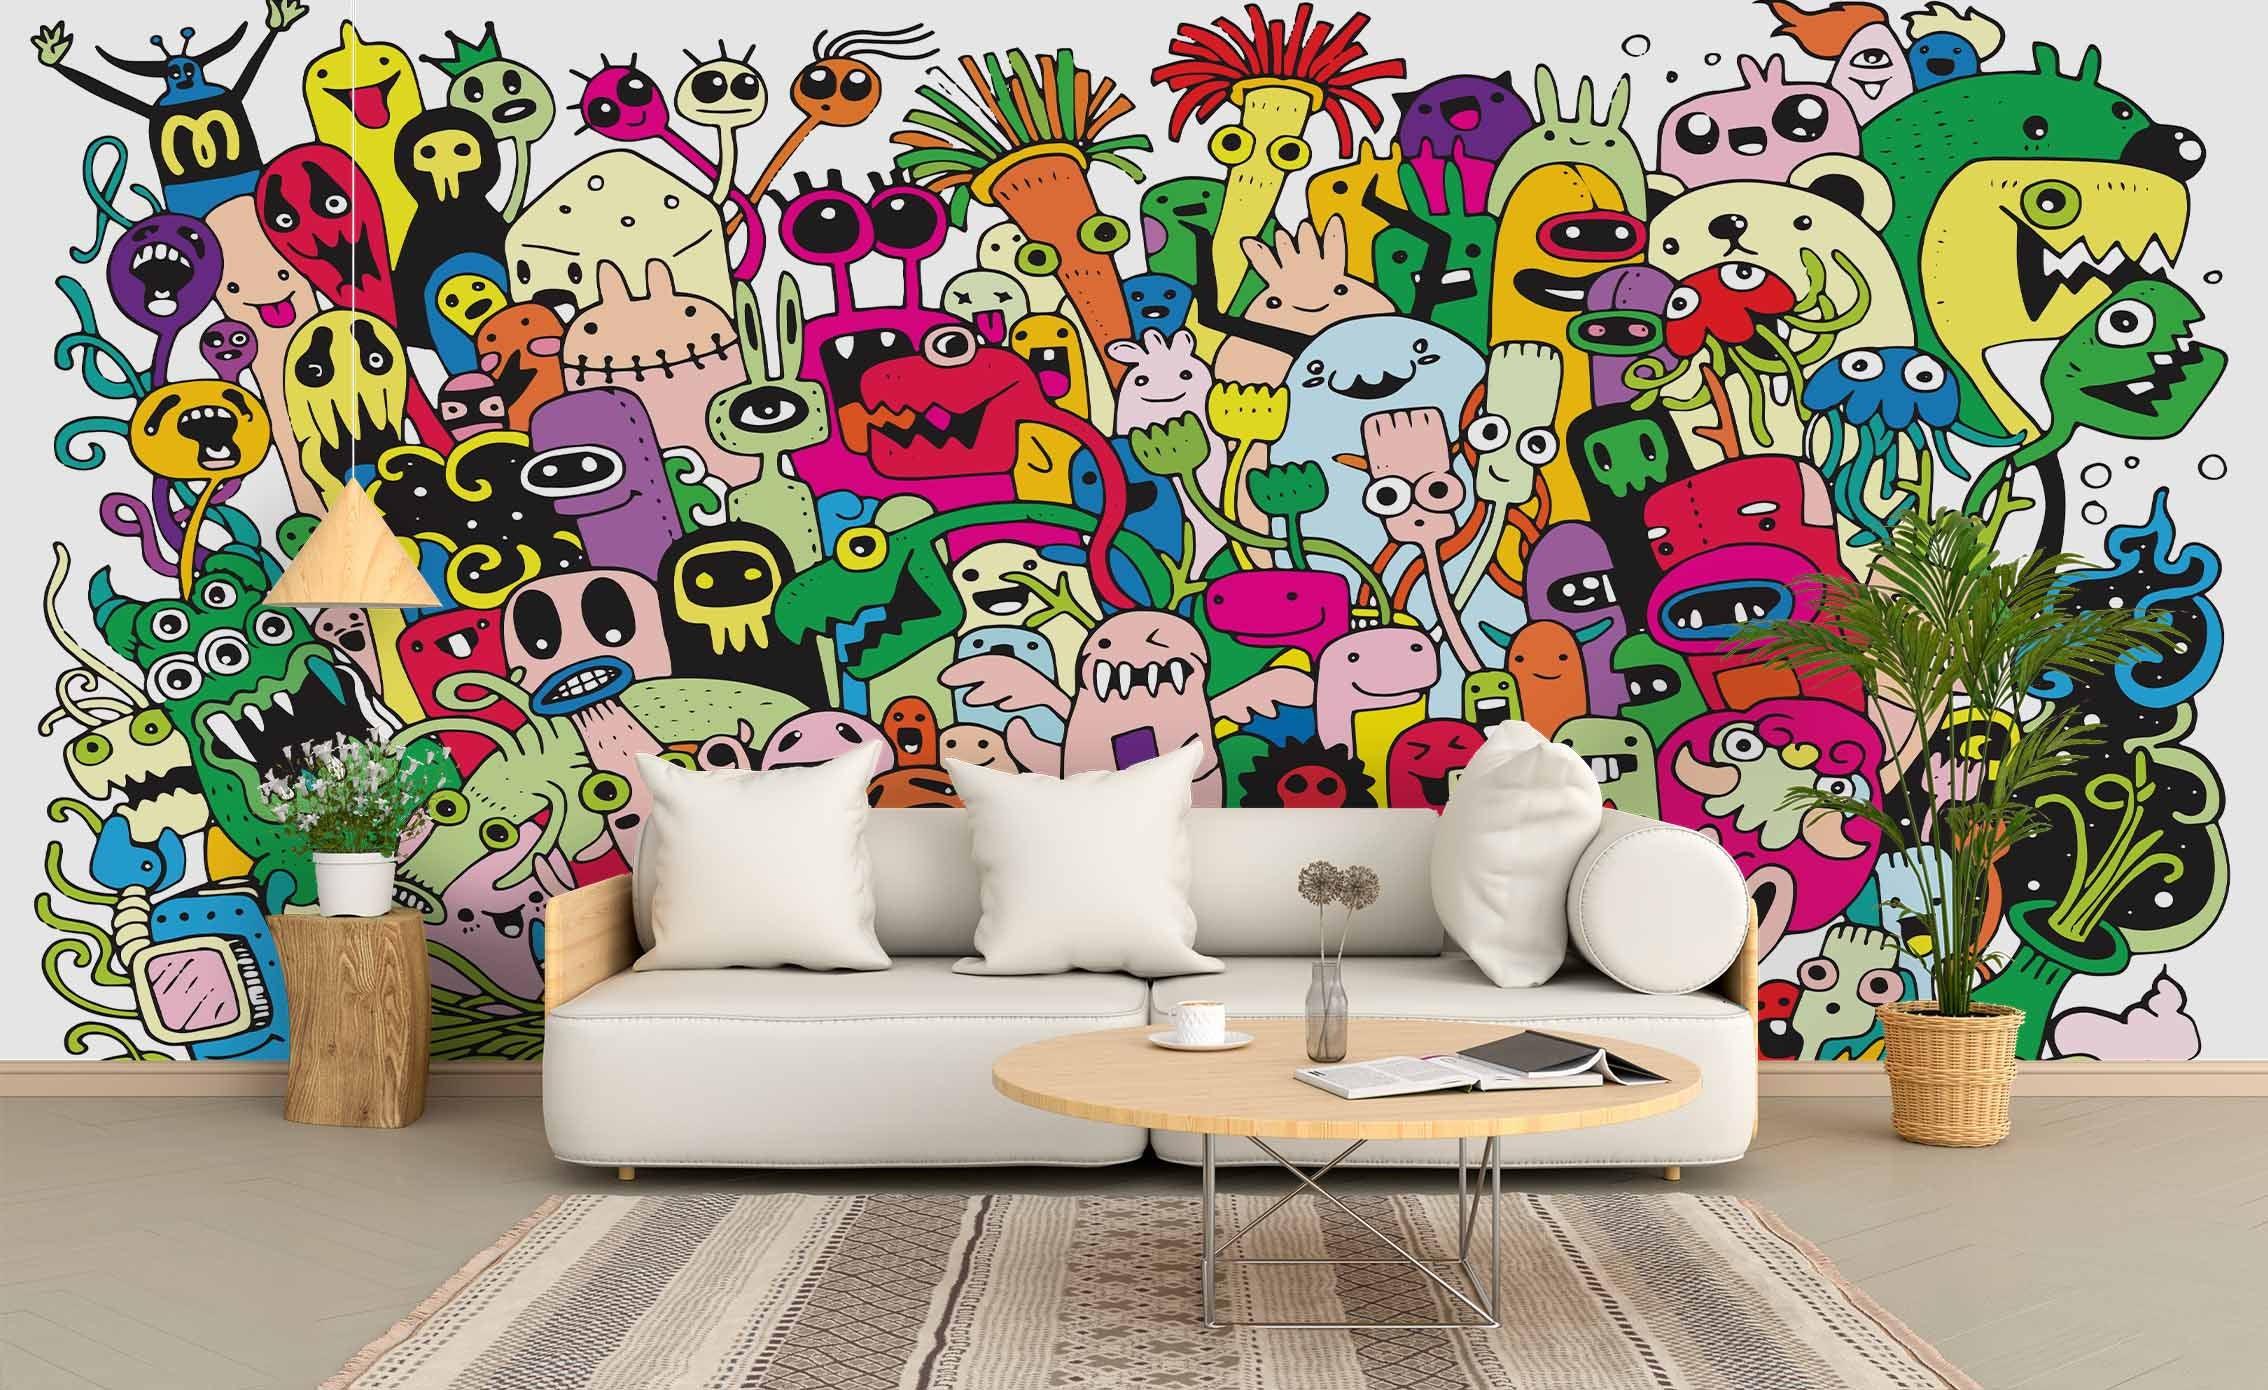 3D Cartoon Graffiti Wall Mural Wallpaper SF18- Jess Art Decoration